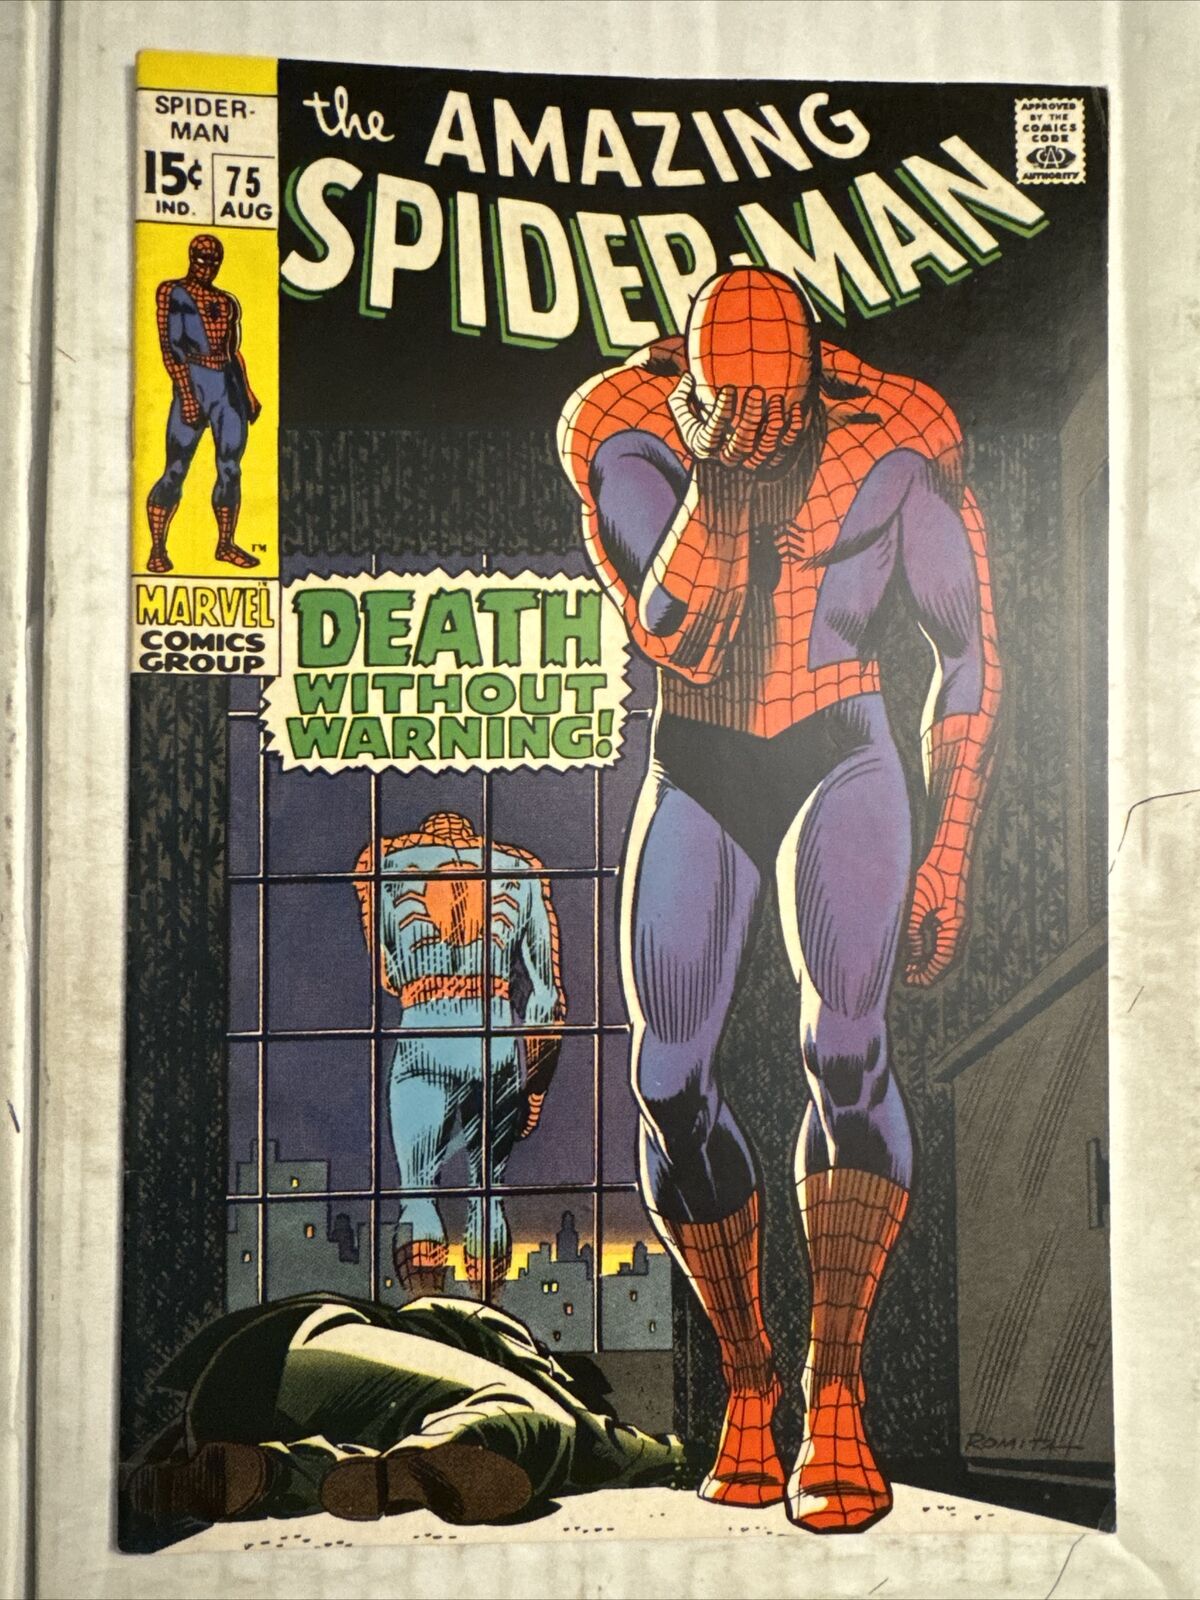 Amazing Spider-Man #75 VF+ Death of Silvermane Classic Romita Cover